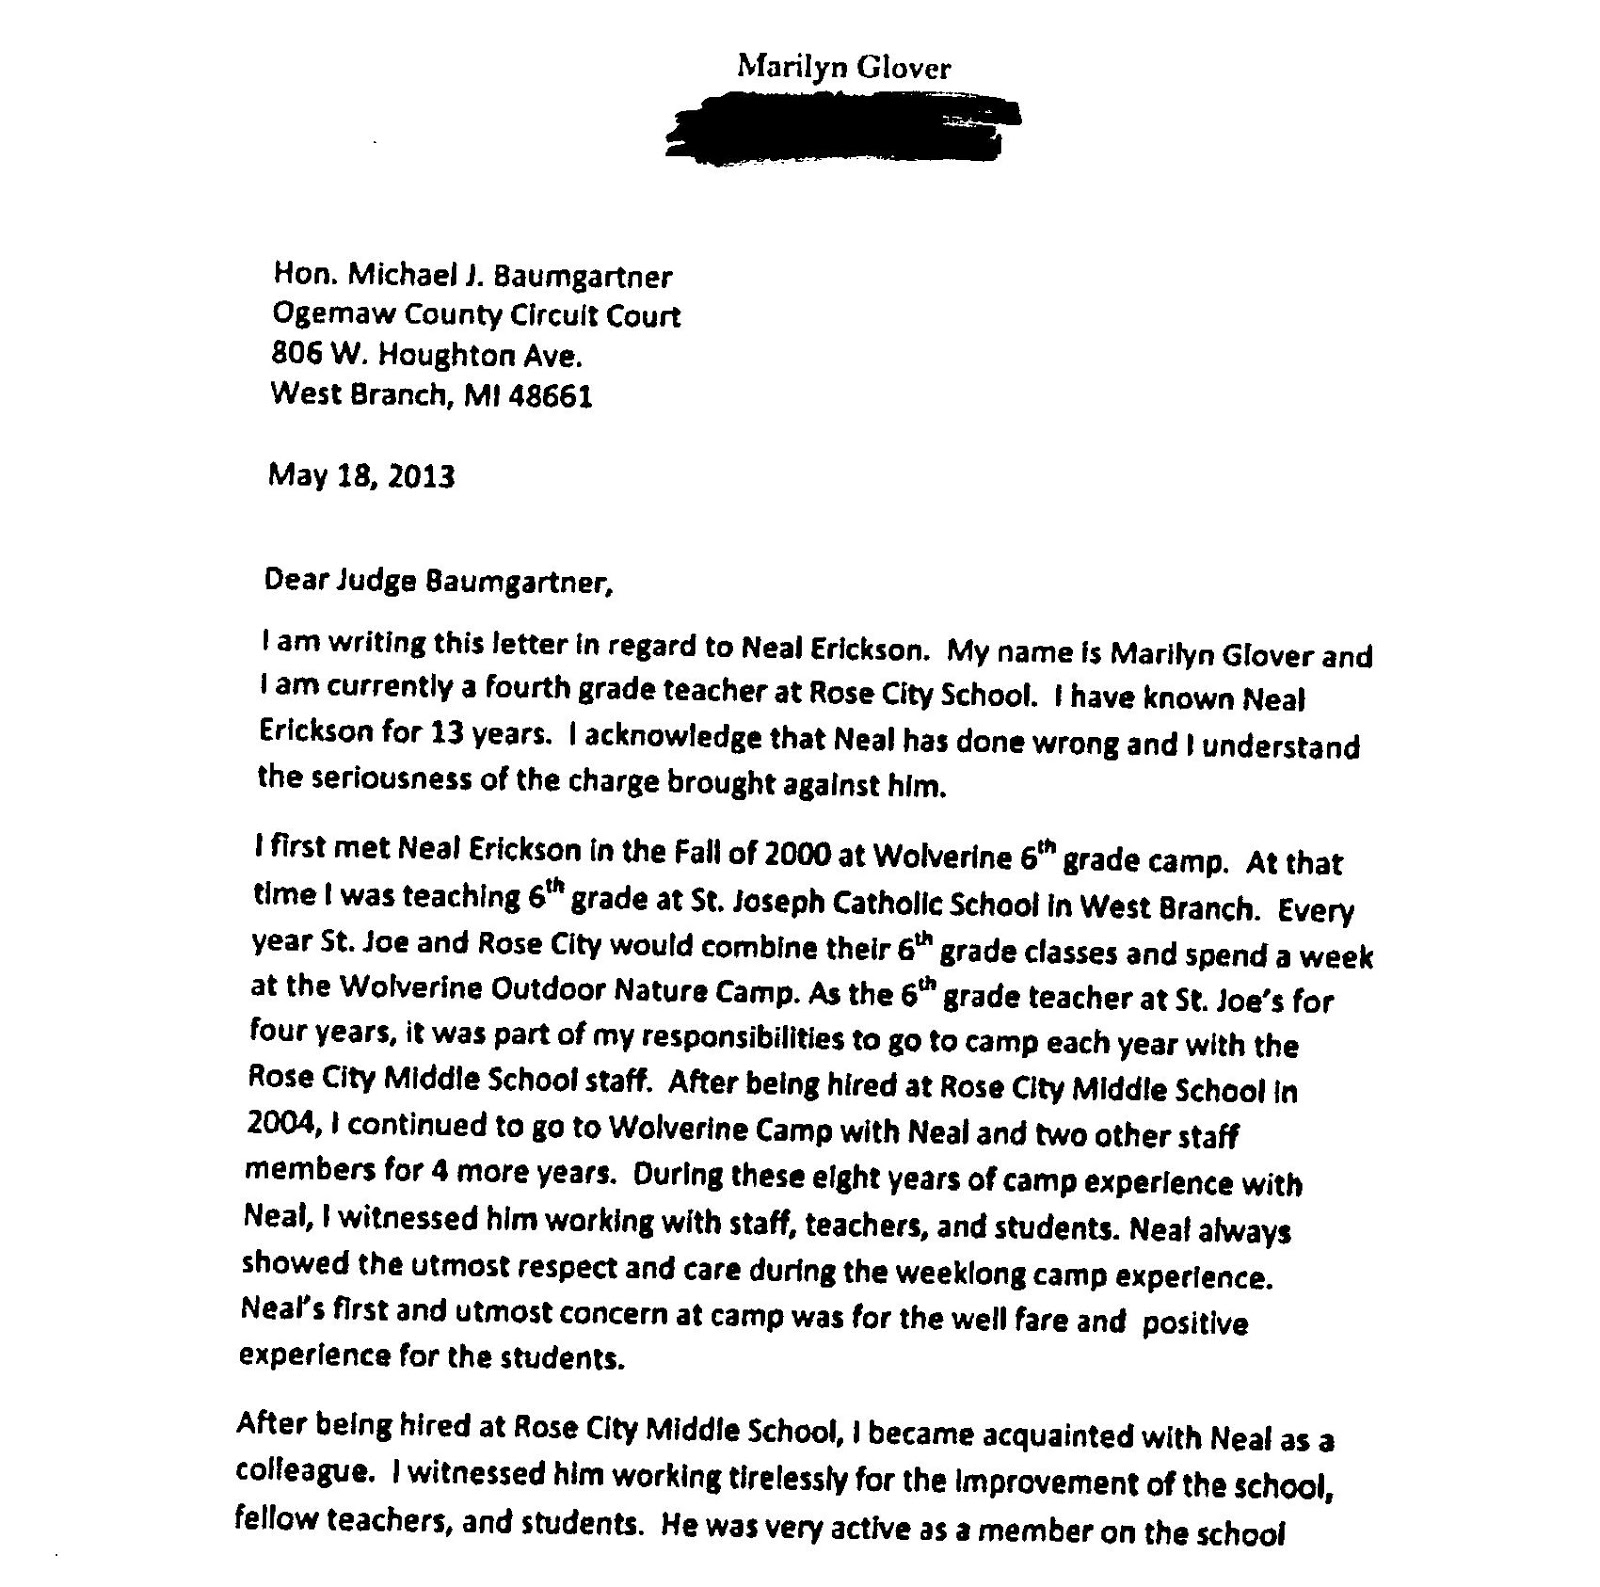 Leniency Letters from West Branch Rose City Teachers